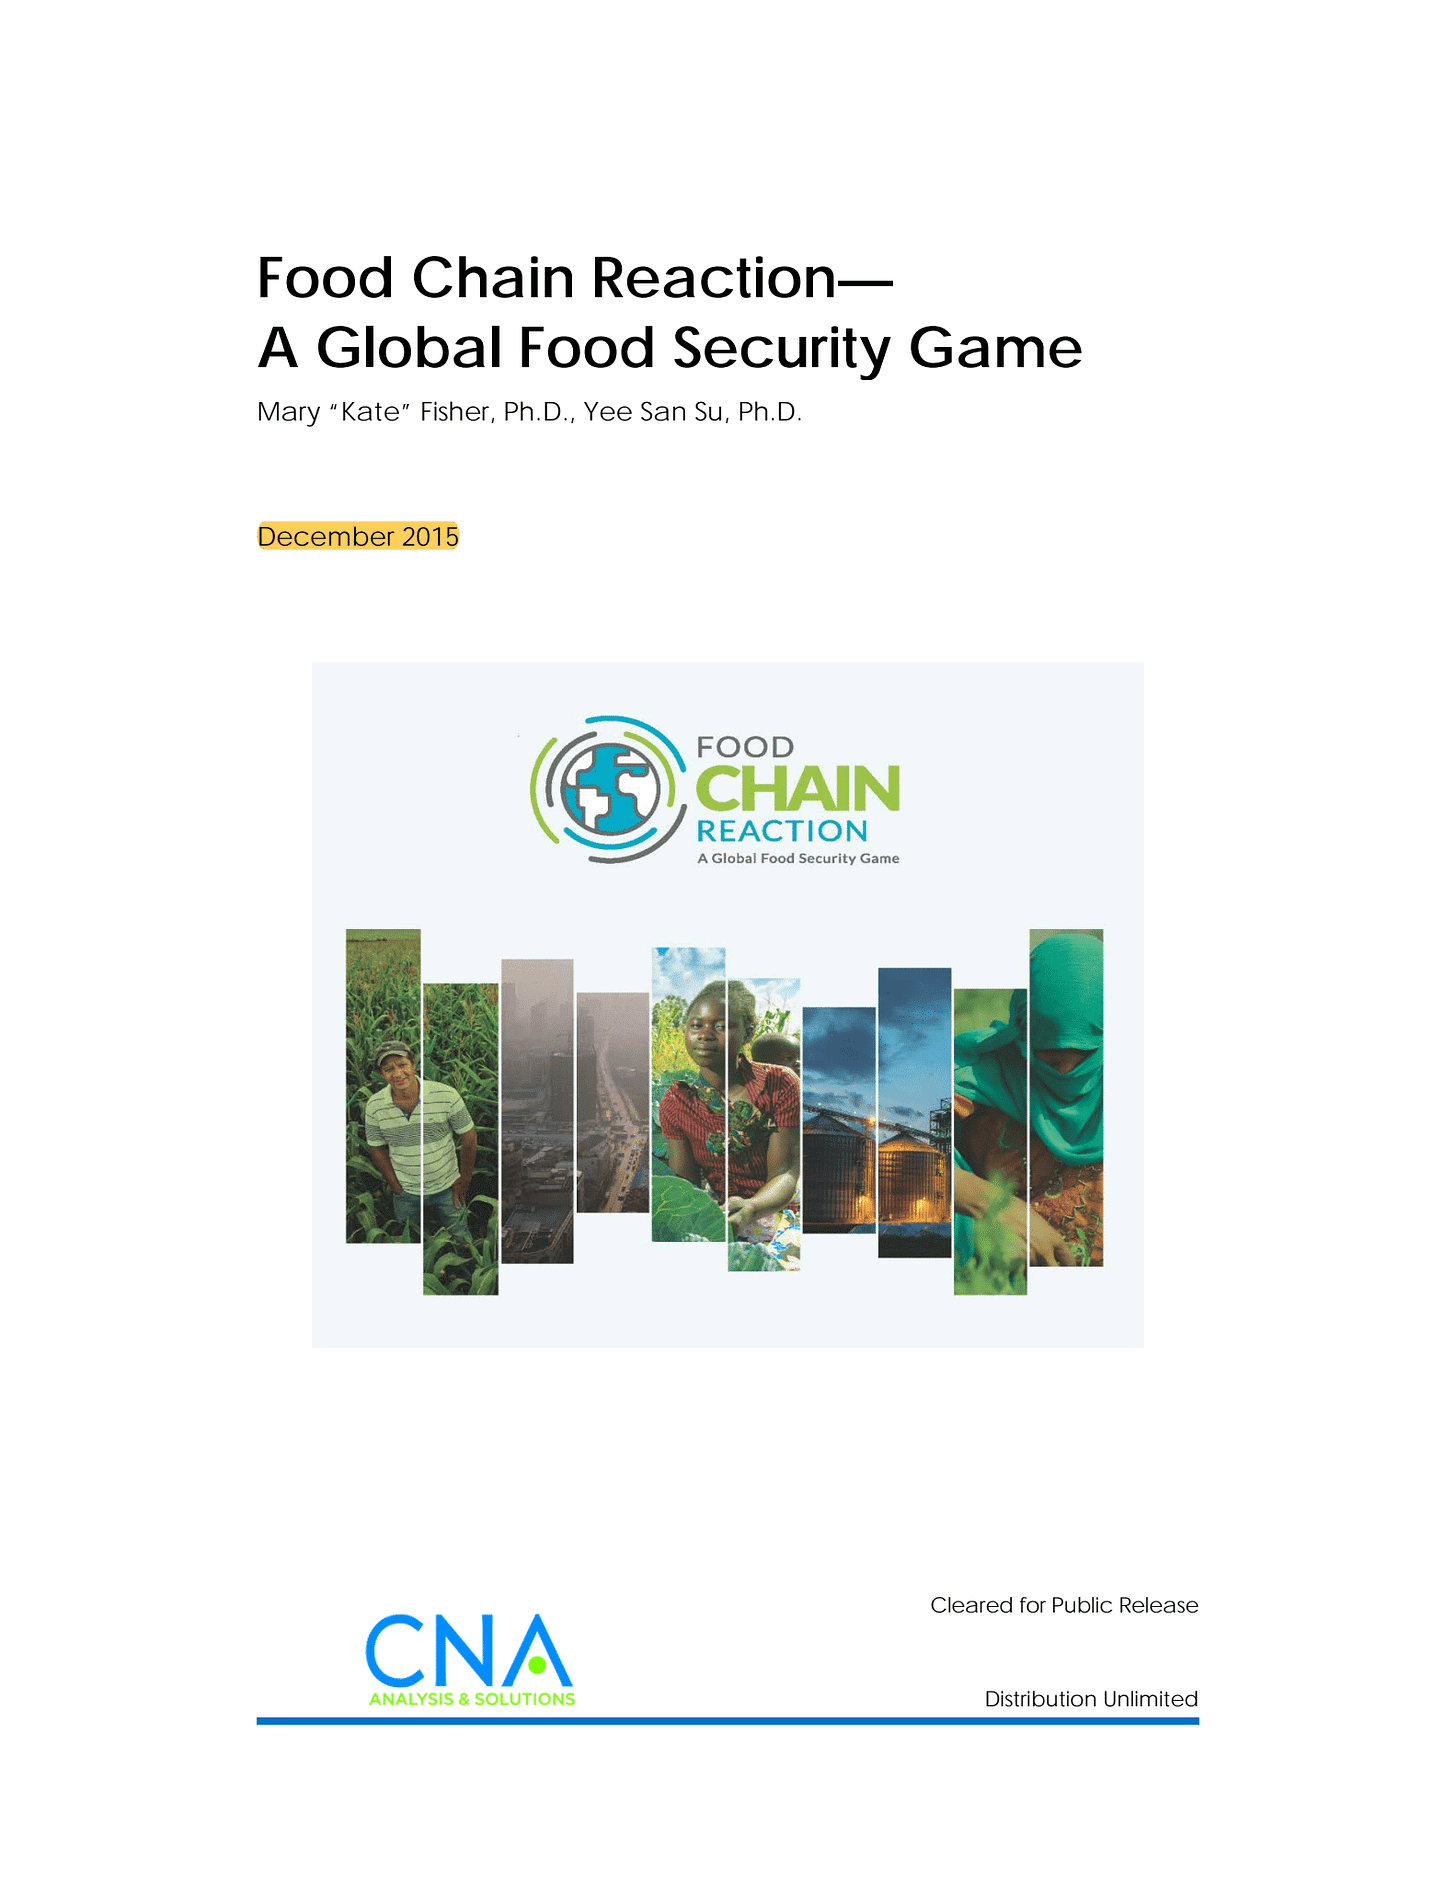 Food Chain Reaction— A Global Food Security Game iqr-2015-u-012427.pdf